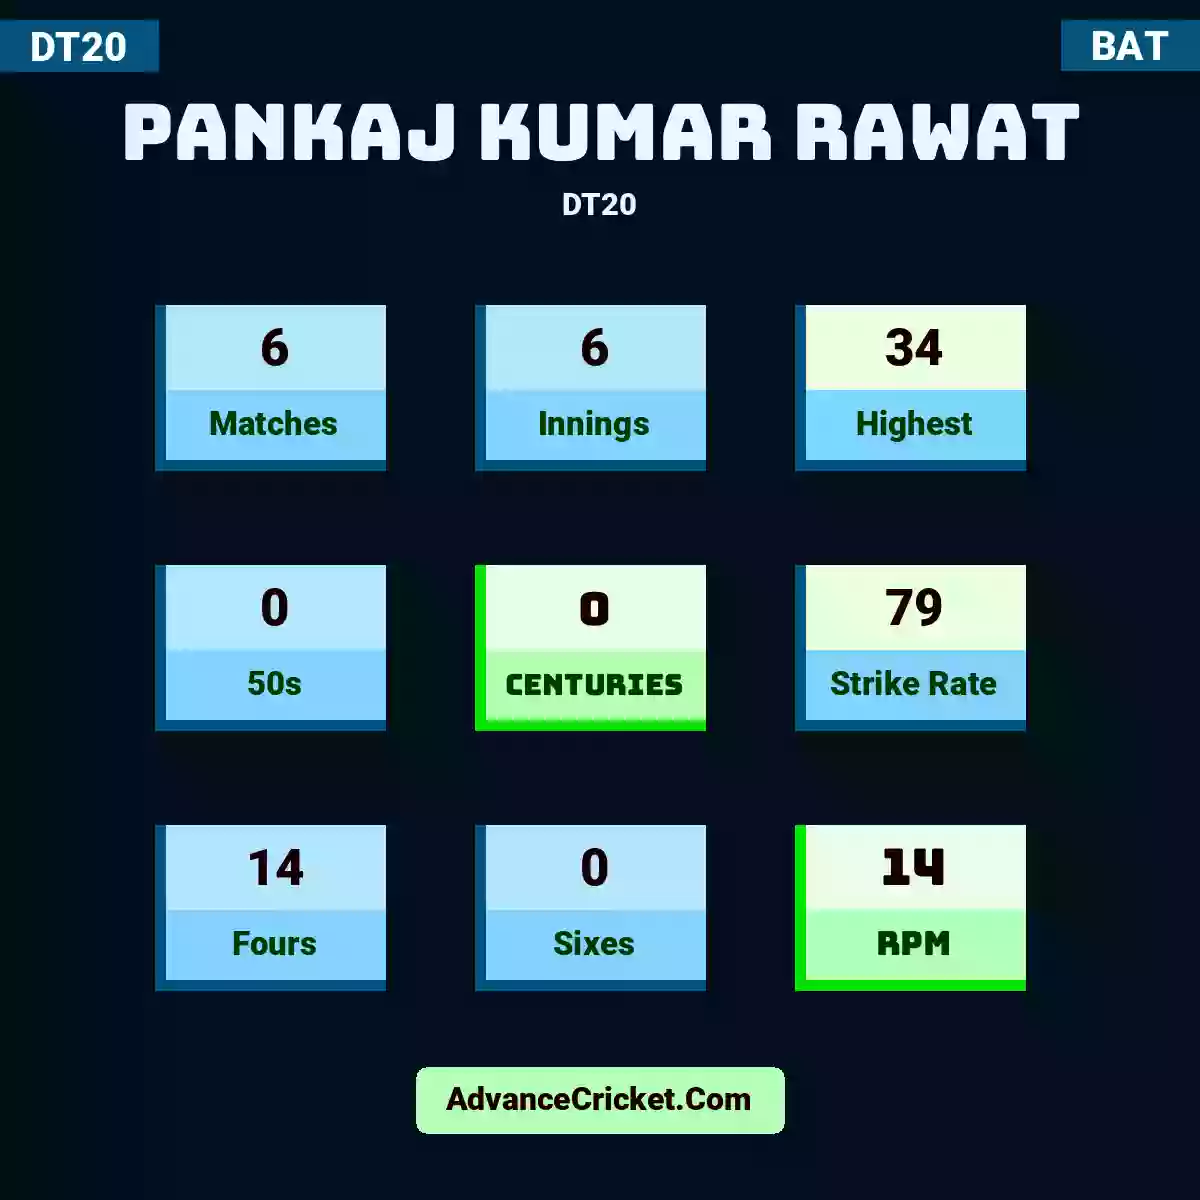 Pankaj Kumar Rawat DT20 , Pankaj Kumar Rawat played 6 matches, scored 34 runs as highest, 0 half-centuries, and 0 centuries, with a strike rate of 79. P.Rawat hit 14 fours and 0 sixes, with an RPM of 14.